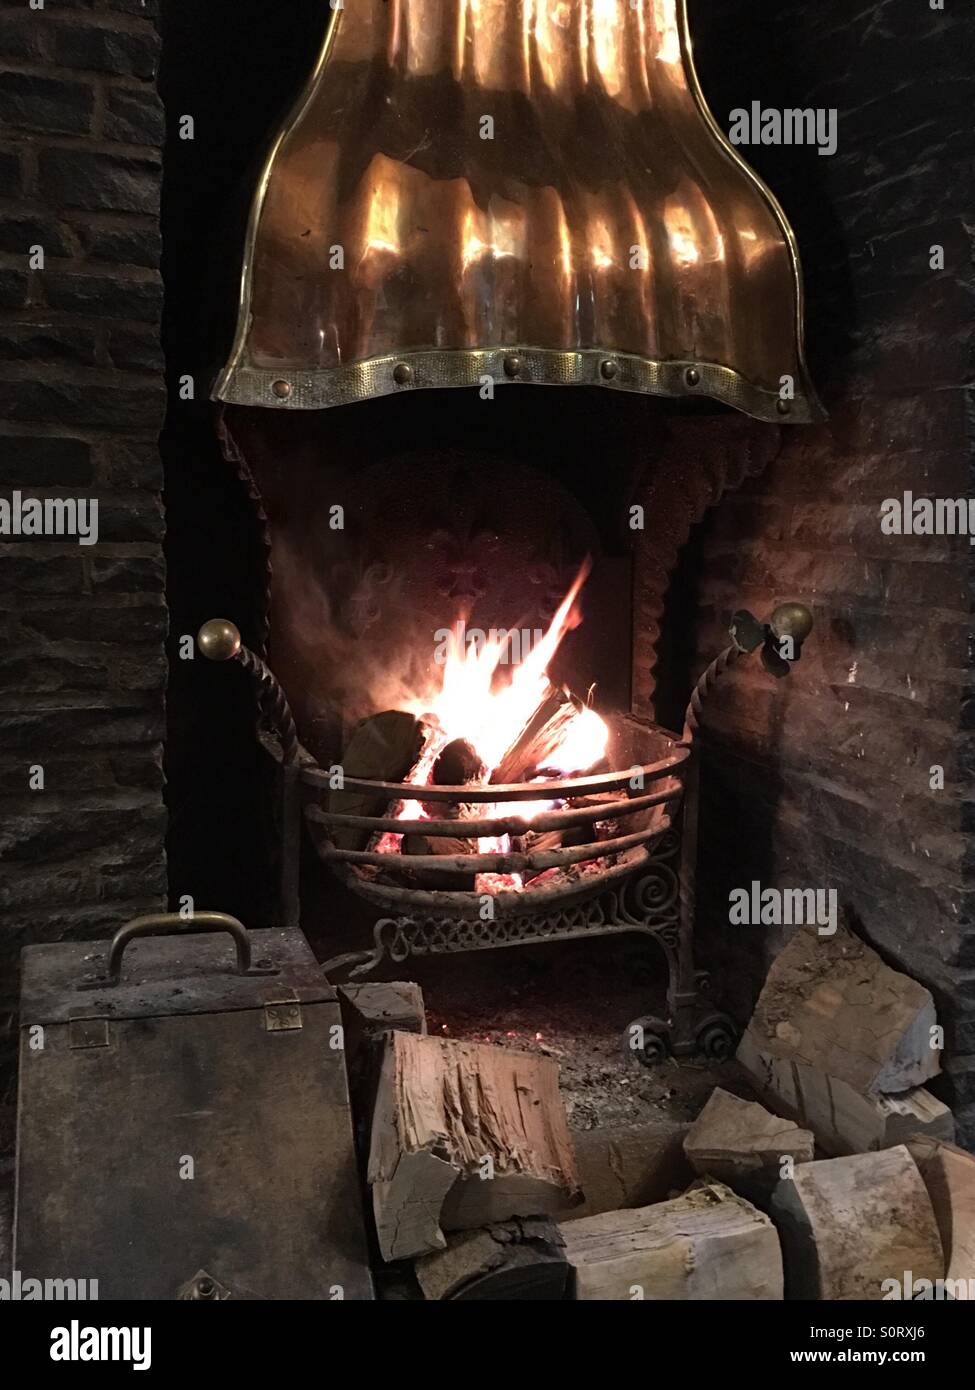 Fireplace at Spaniards Inn, London Stock Photo